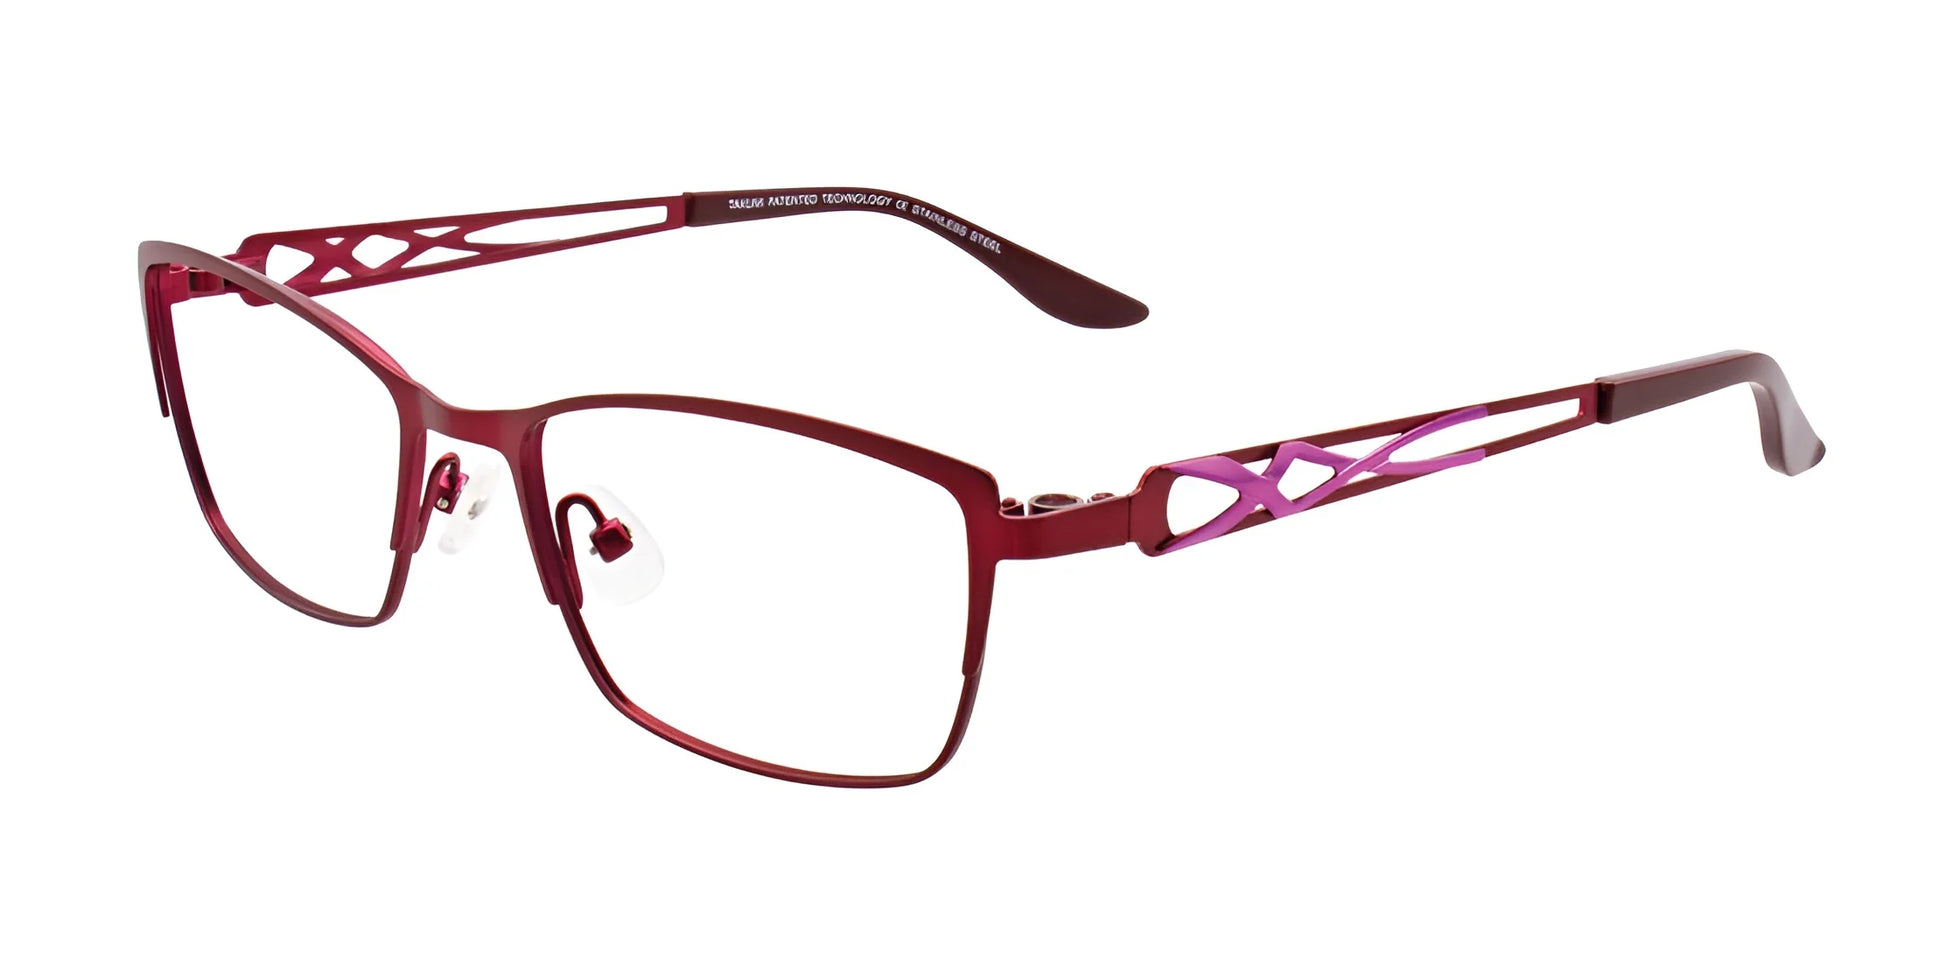 Takumi TK975 Eyeglasses Satin Red & Shiny Pink